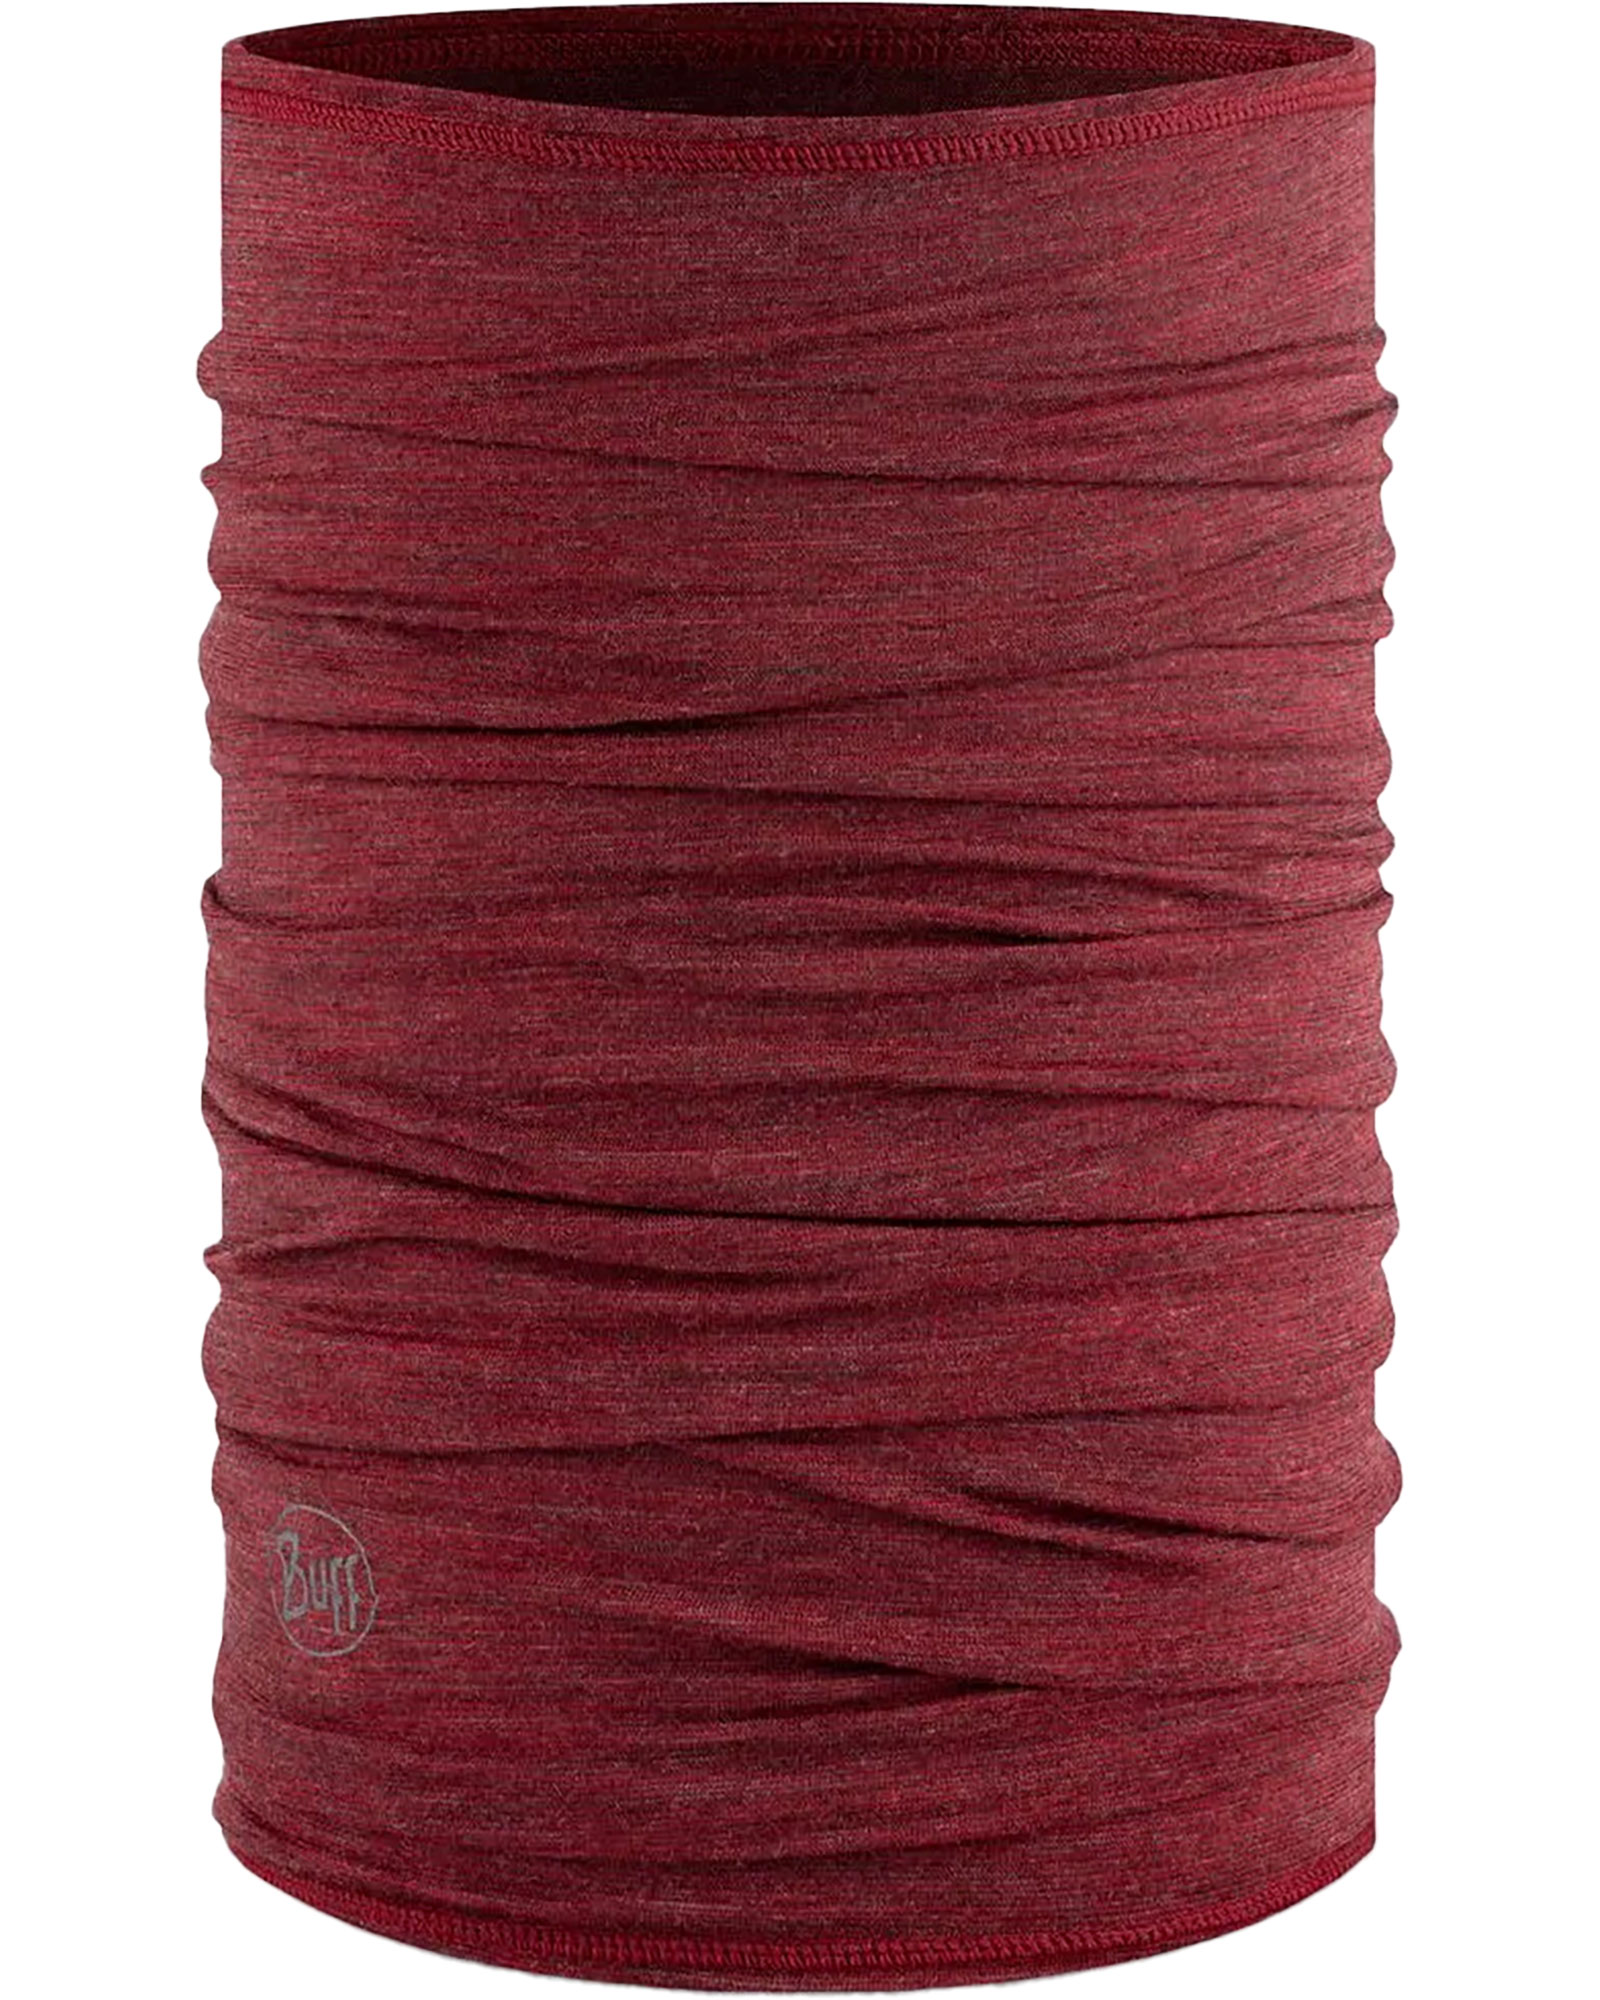 Buff Merino Wool 125 Move Neck Warmer   Mars Red Multi Stripes - Mars Red Multi Stripes